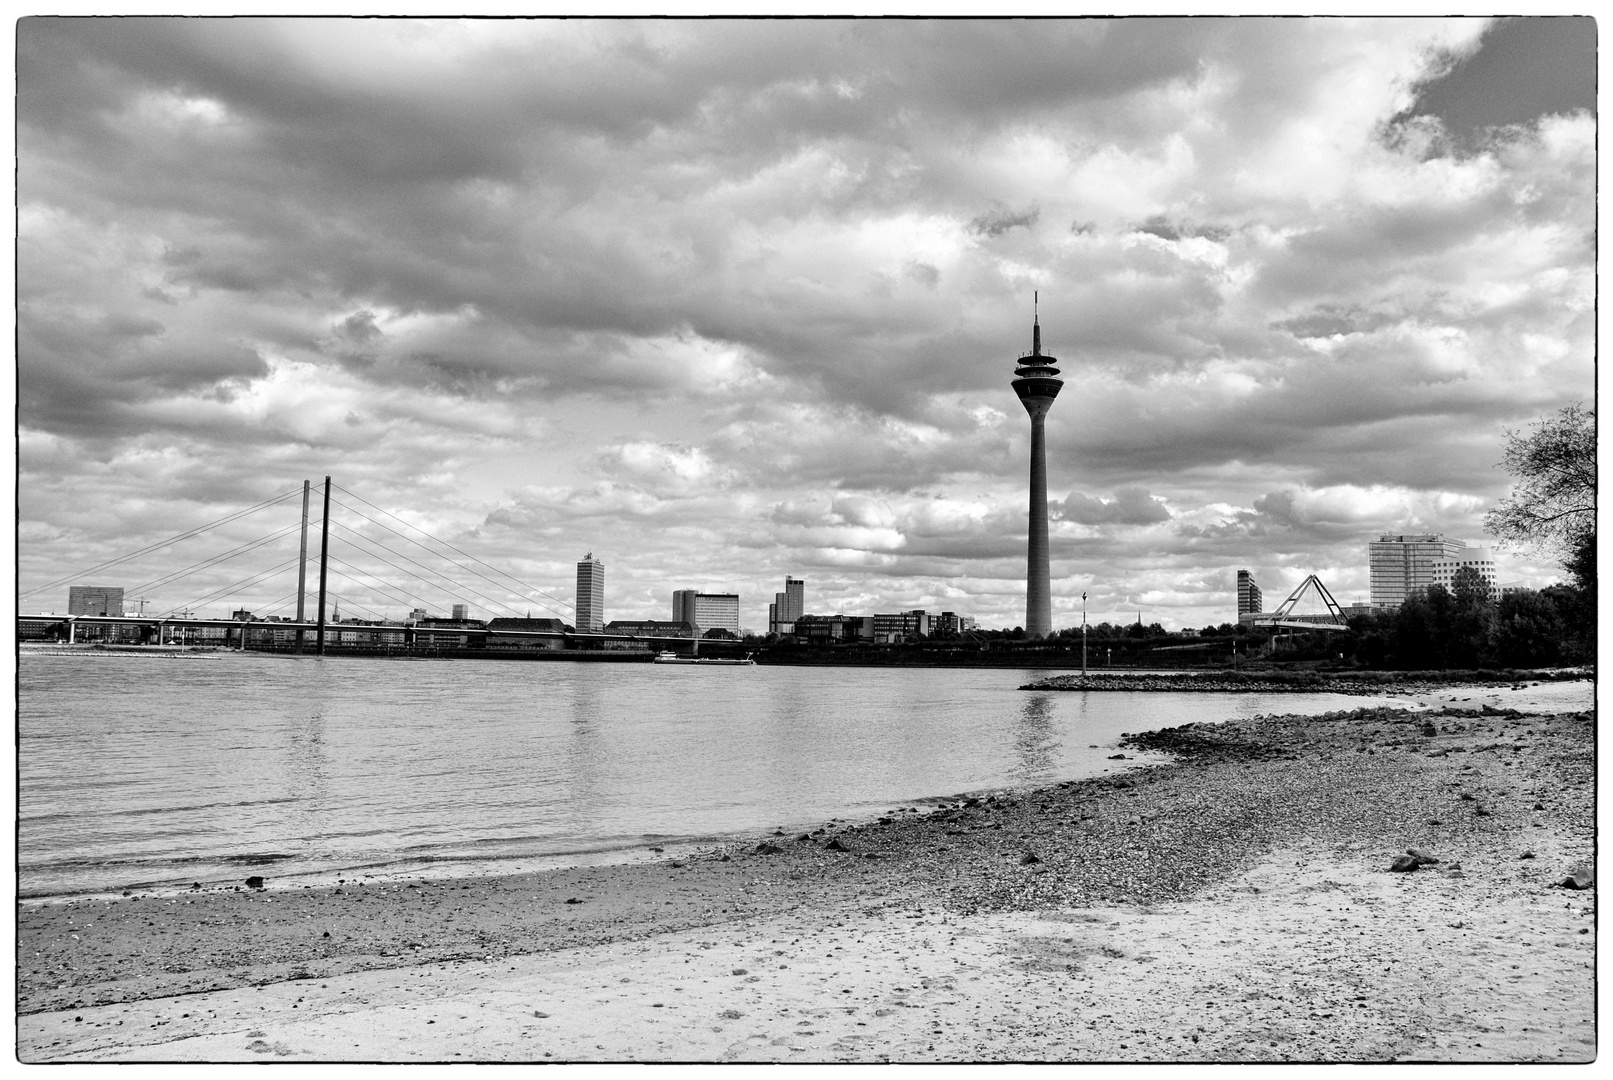 Düsseldorf - my love